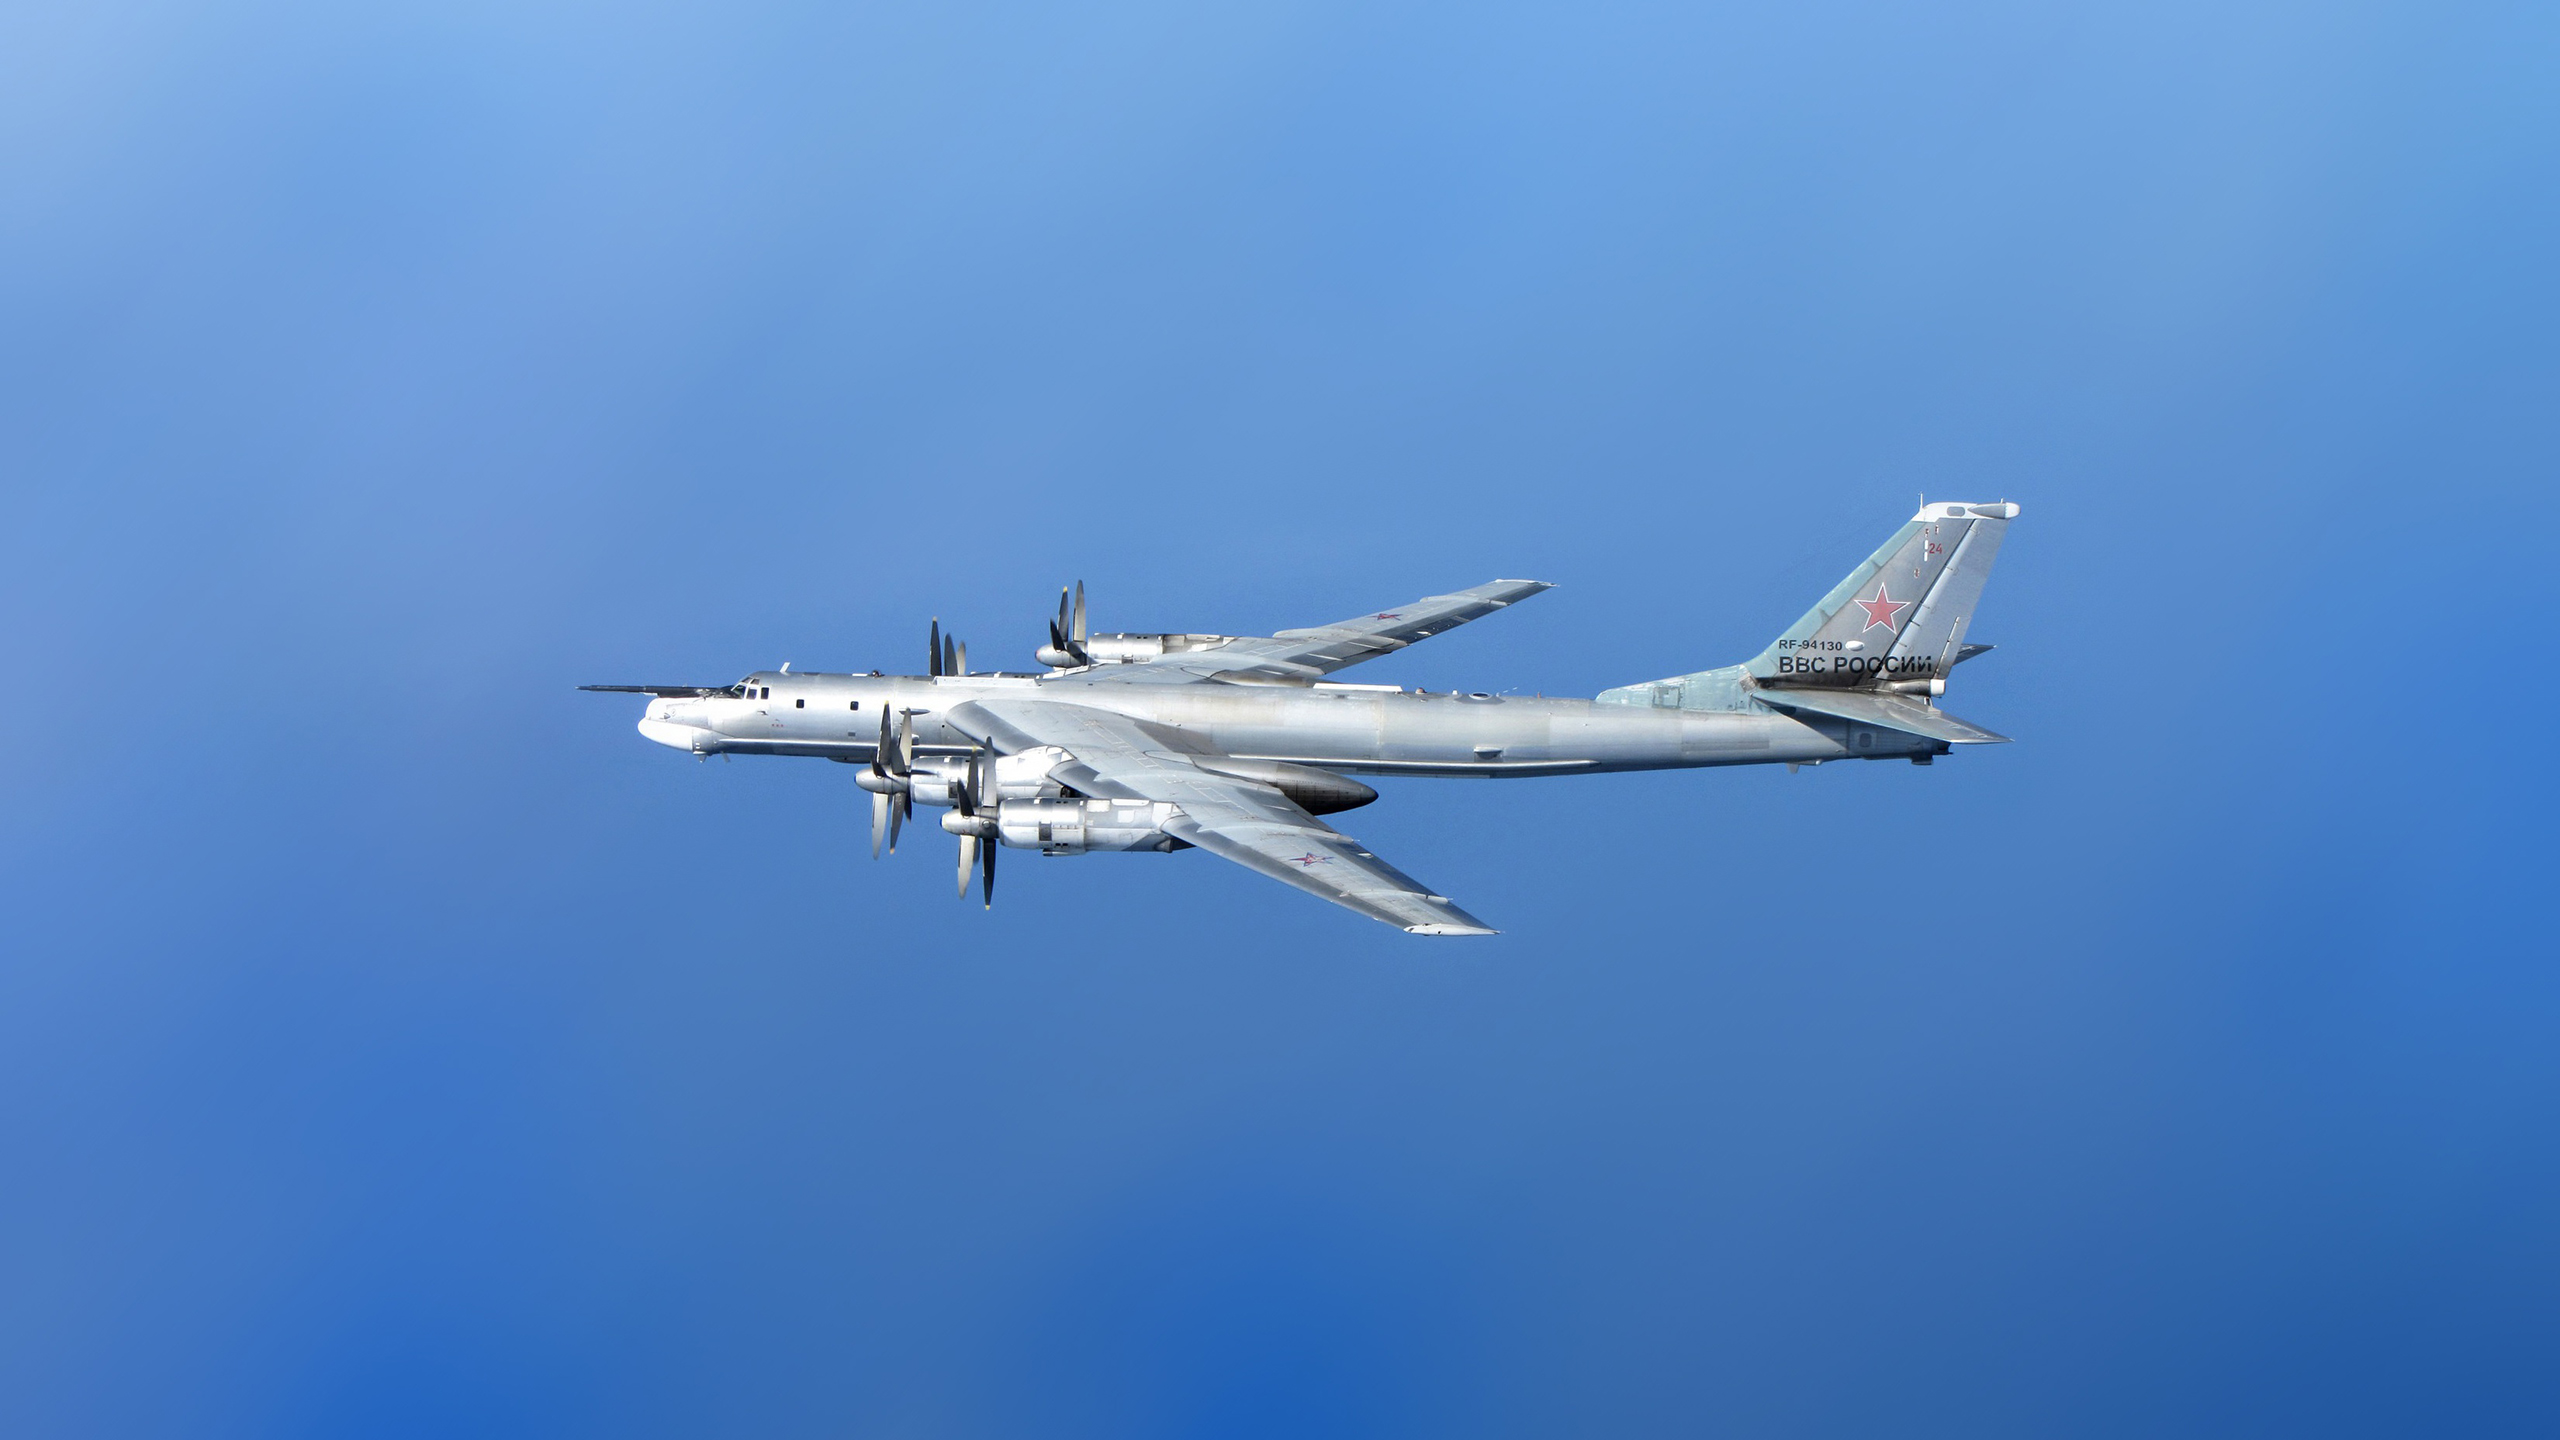 General 2560x1440 Tupolev Tu-95 aircraft military aircraft Bomber strategic bomber sky Russian Air Force turboprop military vehicle military vehicle